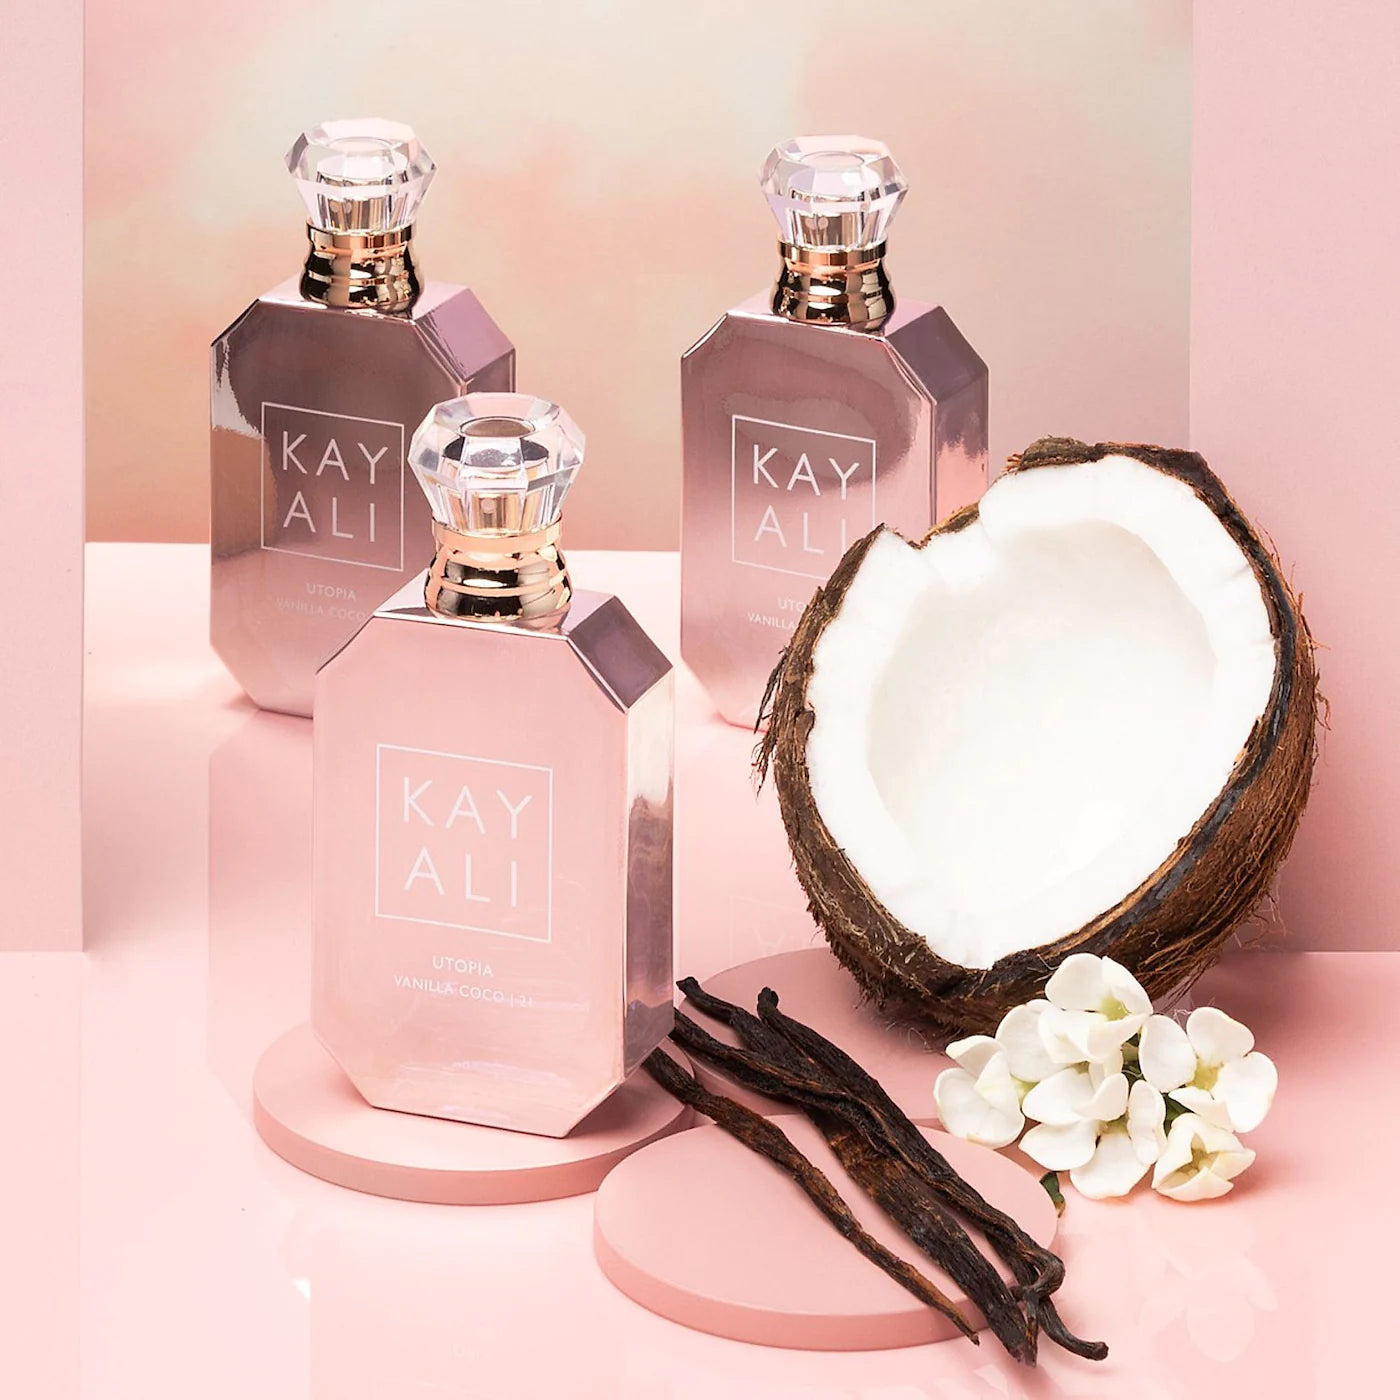 Ranking Kayali Perfumes: Vanilla, Dejavu, Sweet Diamond, Utopia